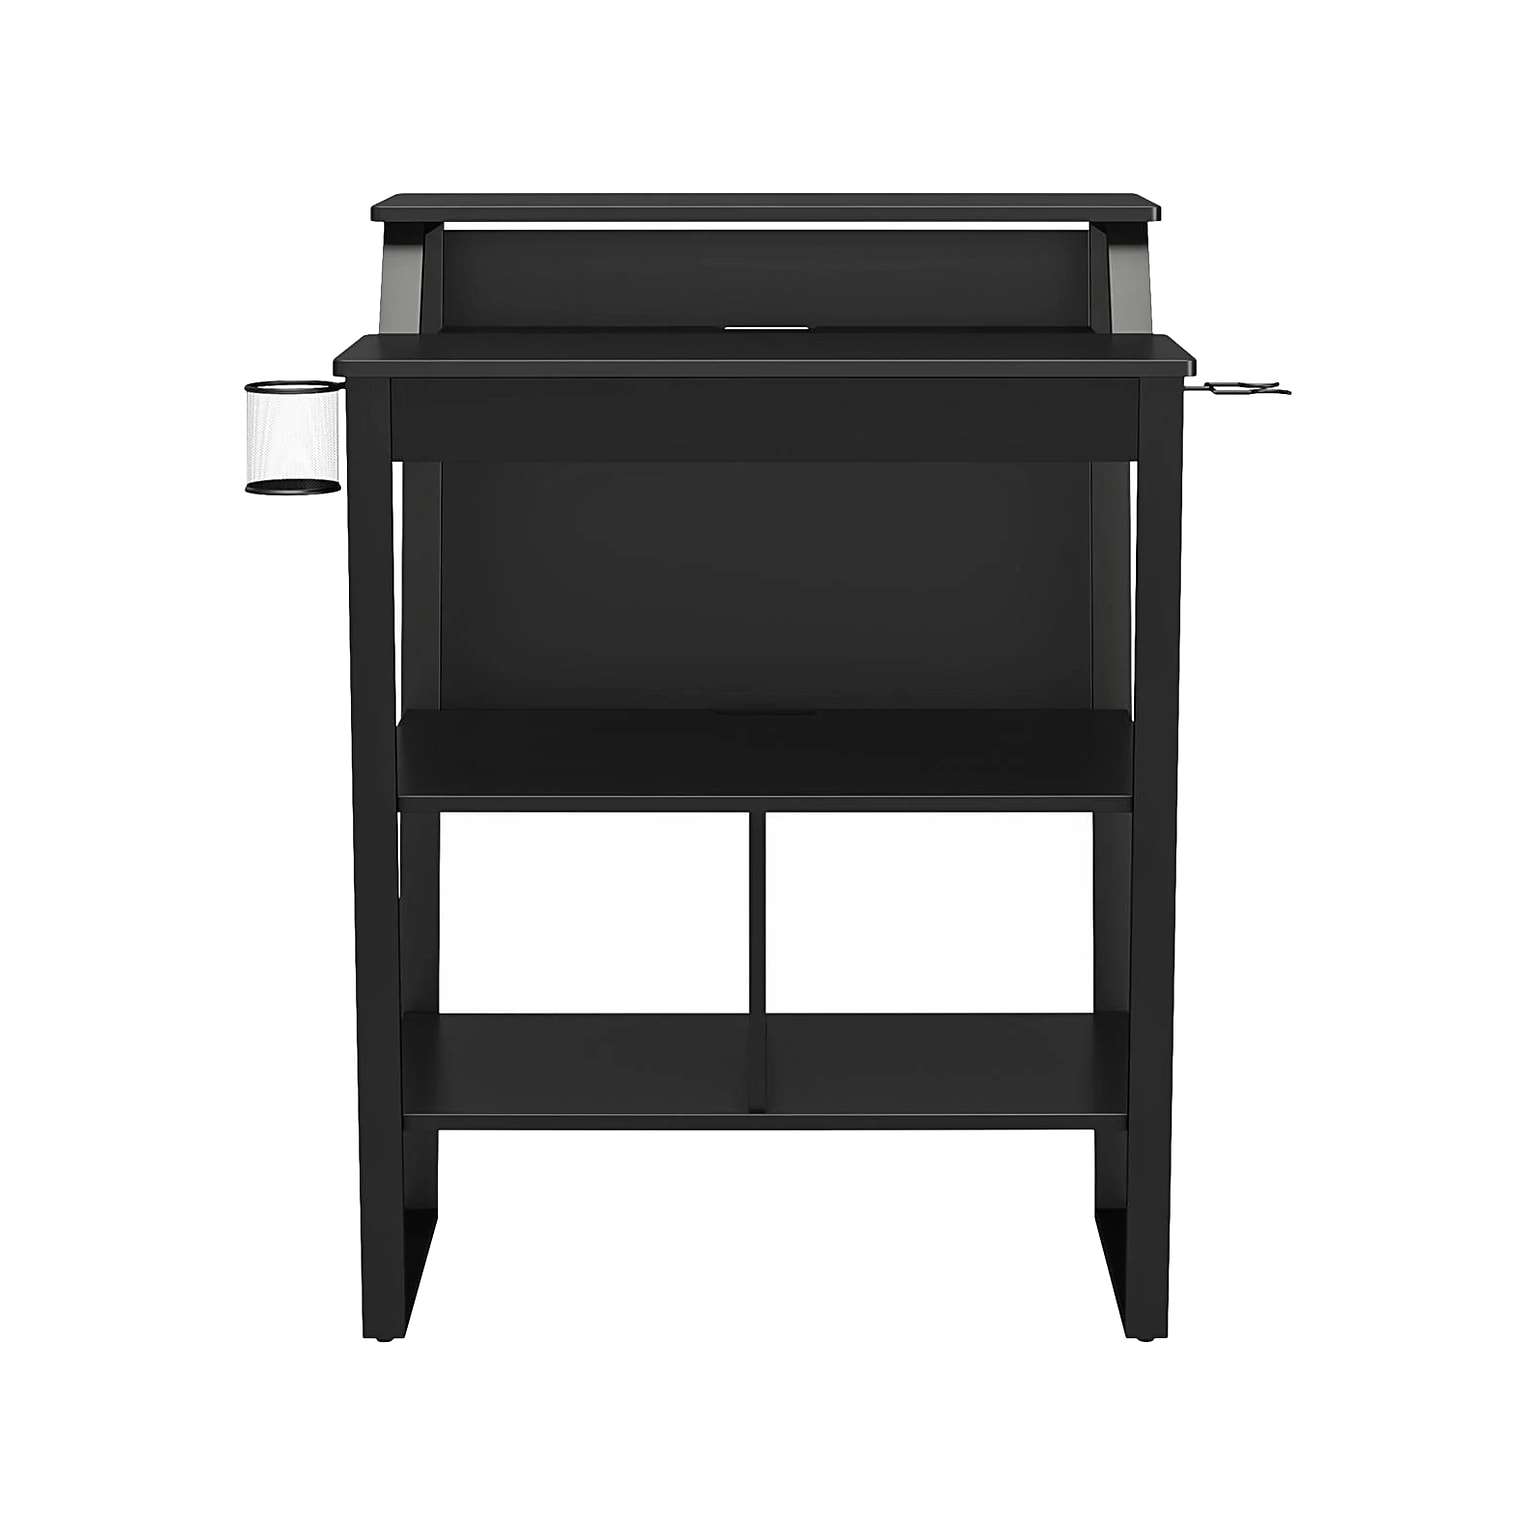 NTense Genesis 40H x 30W Standing Gaming Desk, Black (7031872COM)